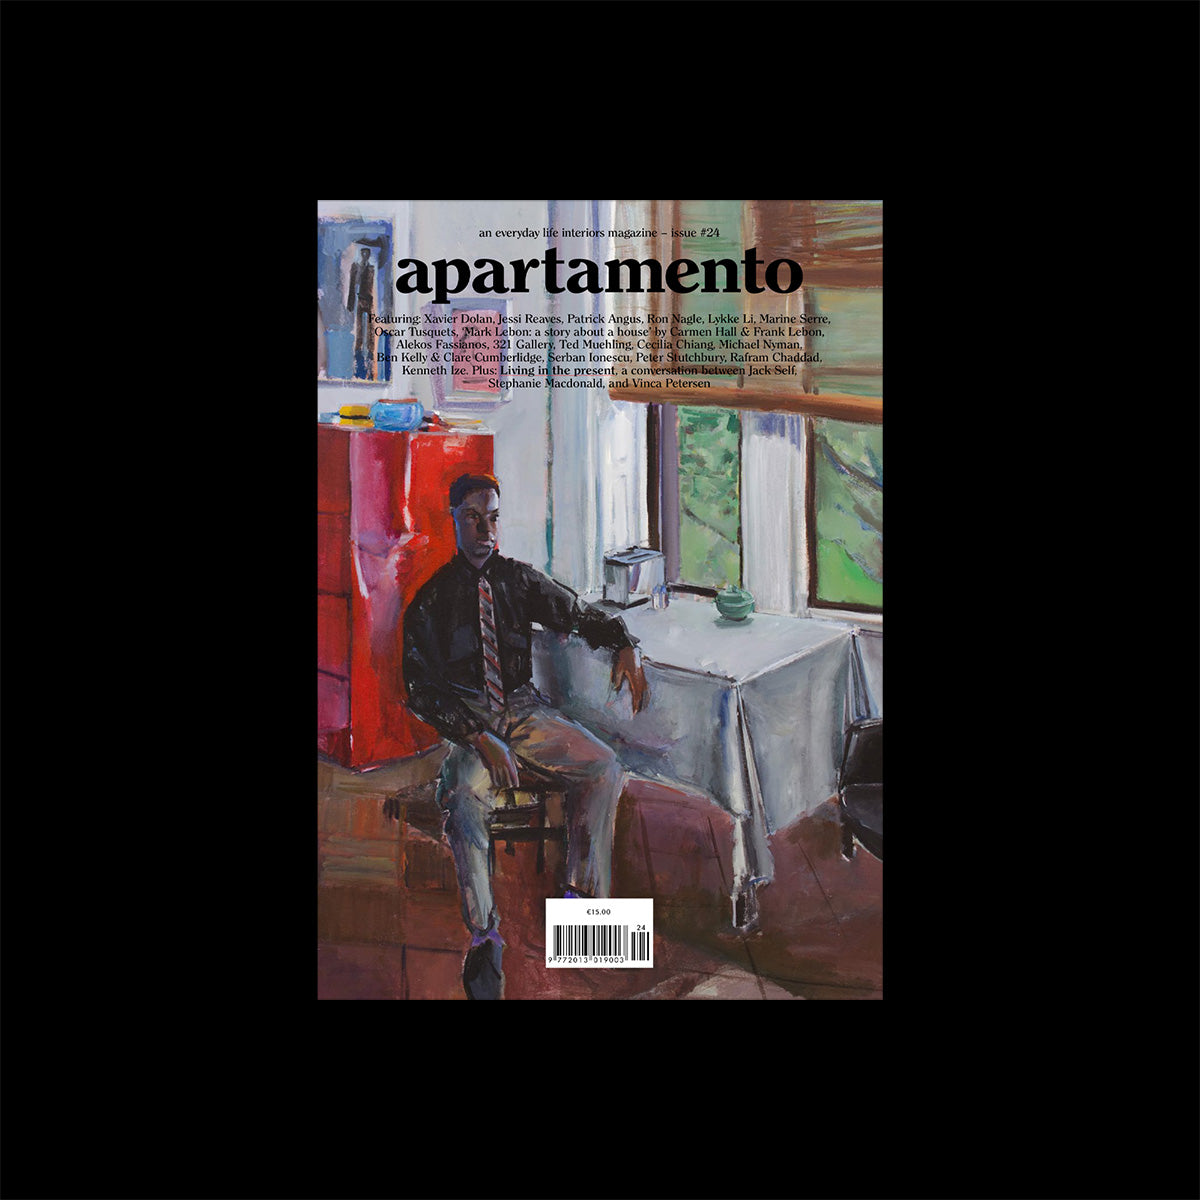 Apartamento - Issue 24